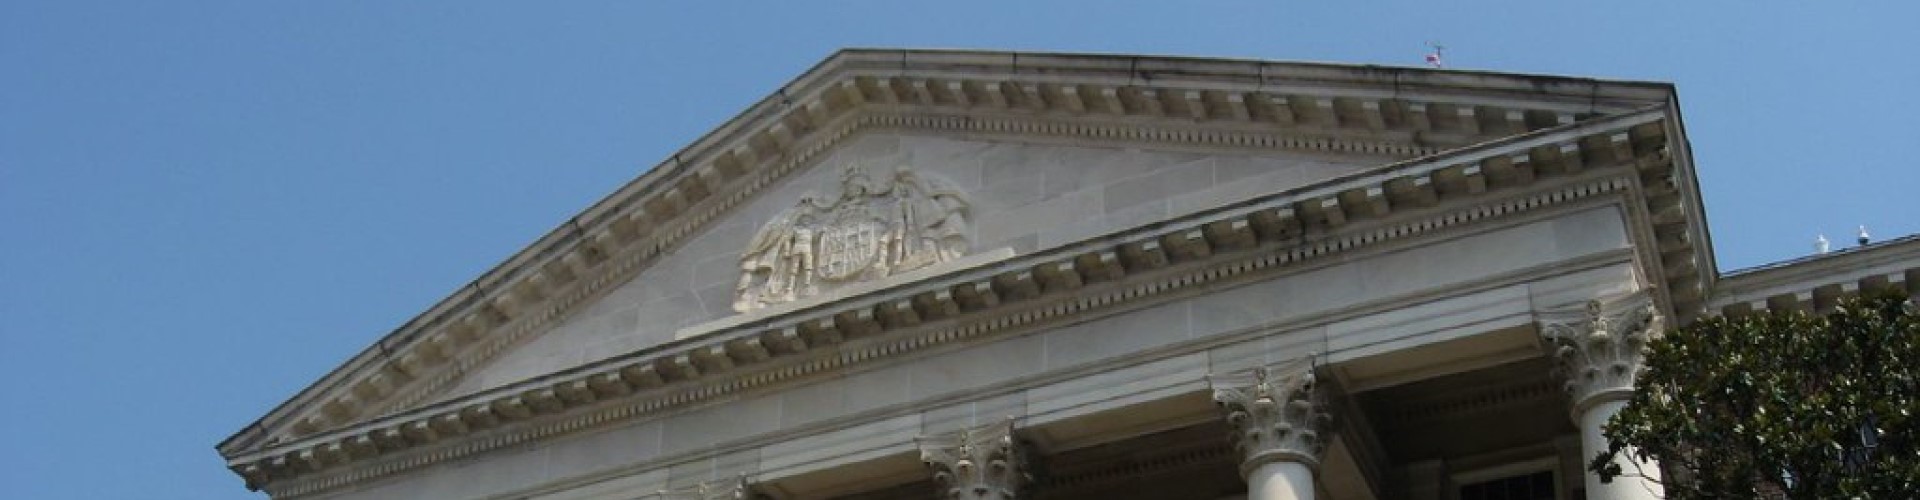 Annapolis Maryland State Legislature Building Against Blue Sky